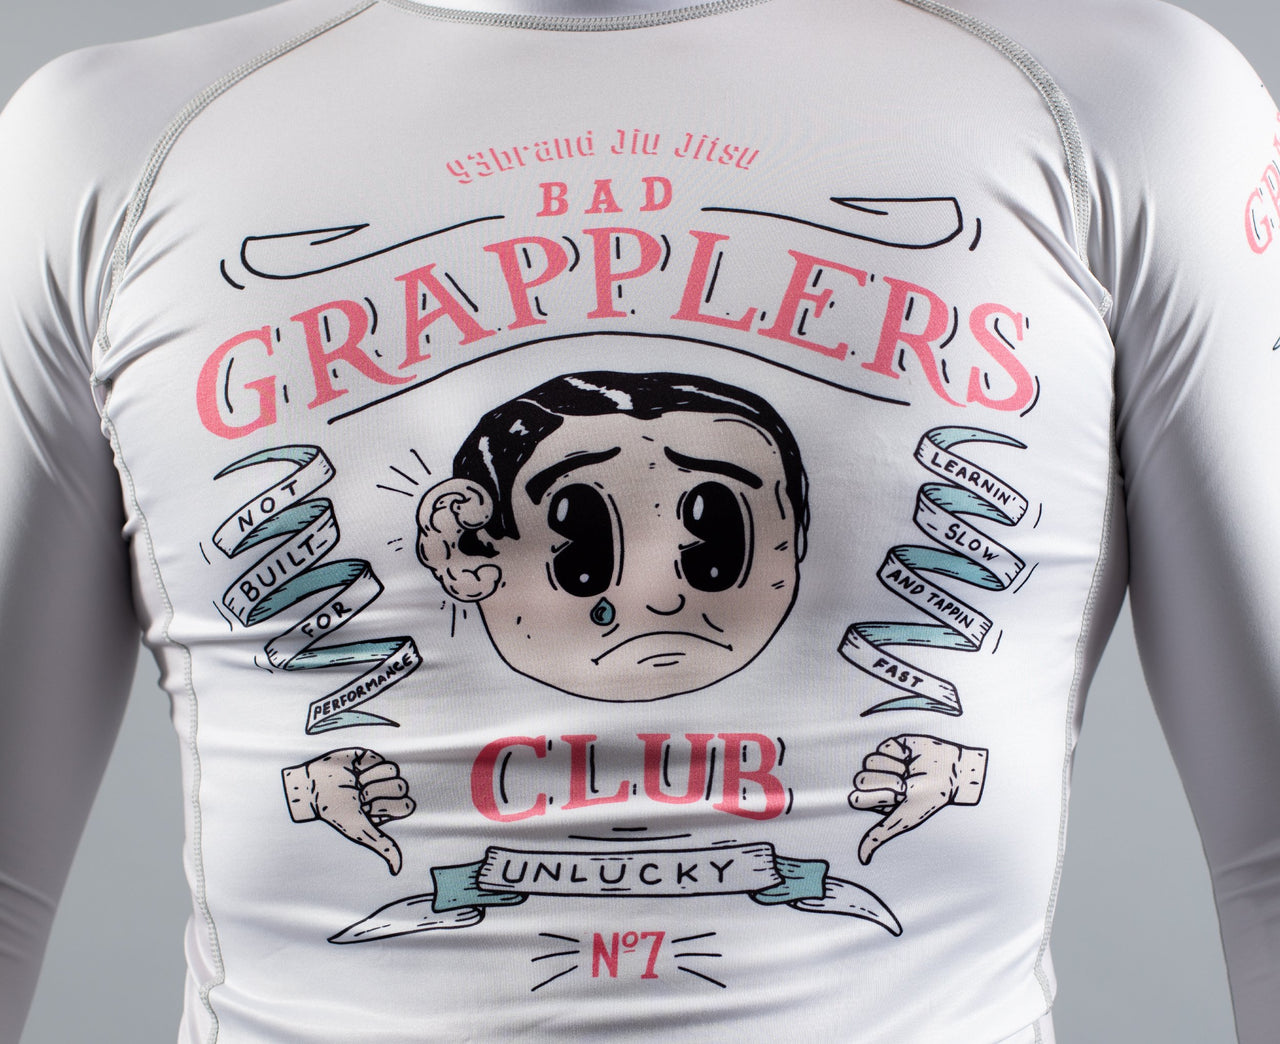 93brand "Bad Grapplers Club" Rash Guard